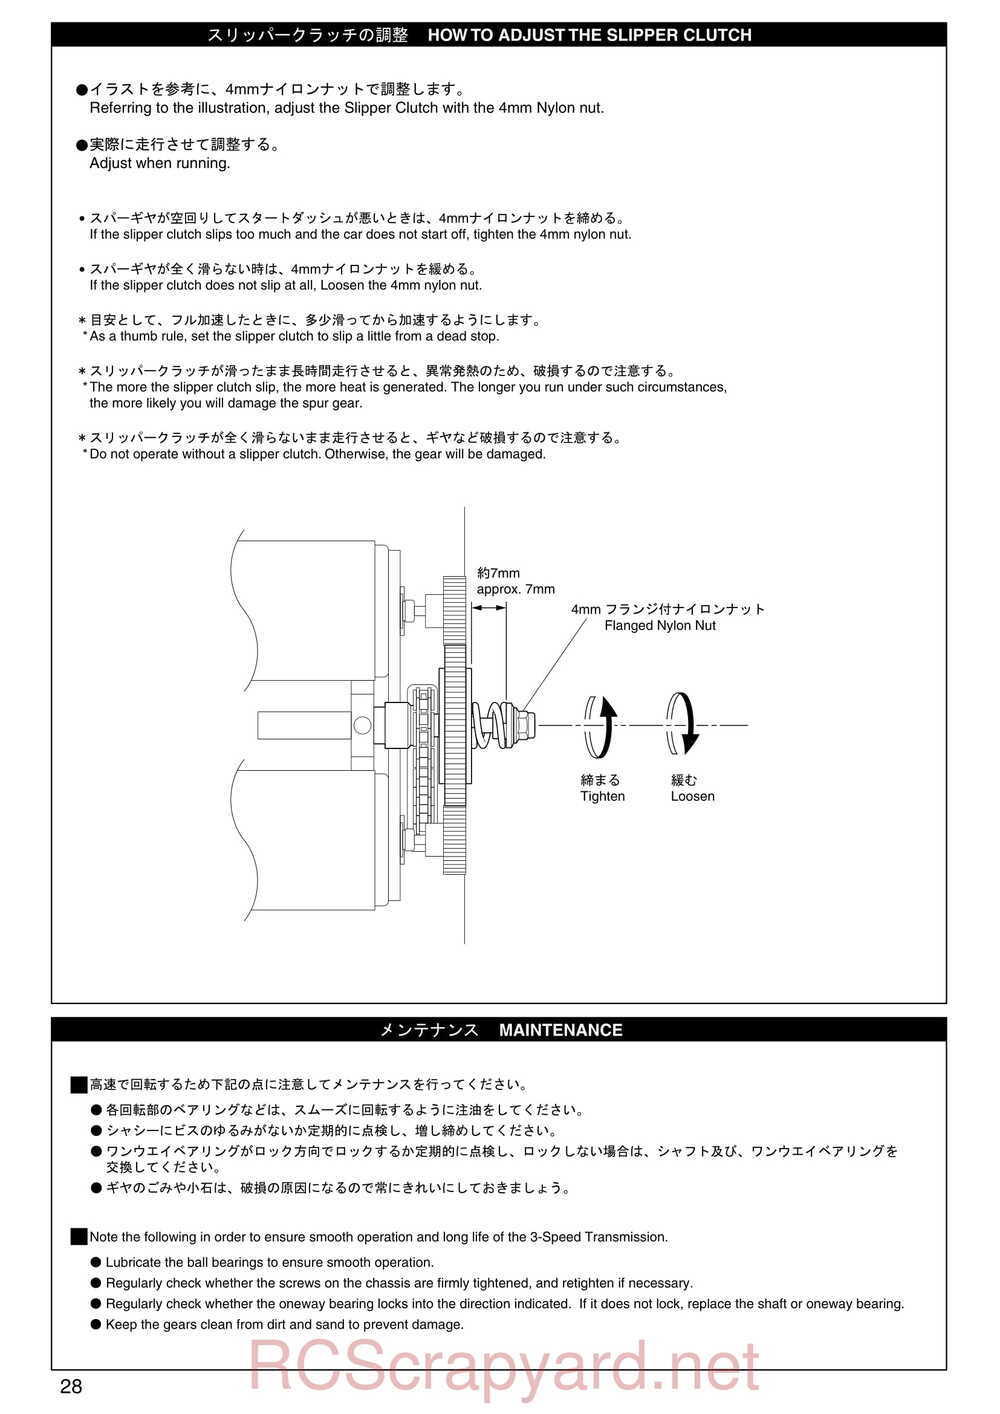 Kyosho - 30521b - Twin-Force - Manual - Page 28